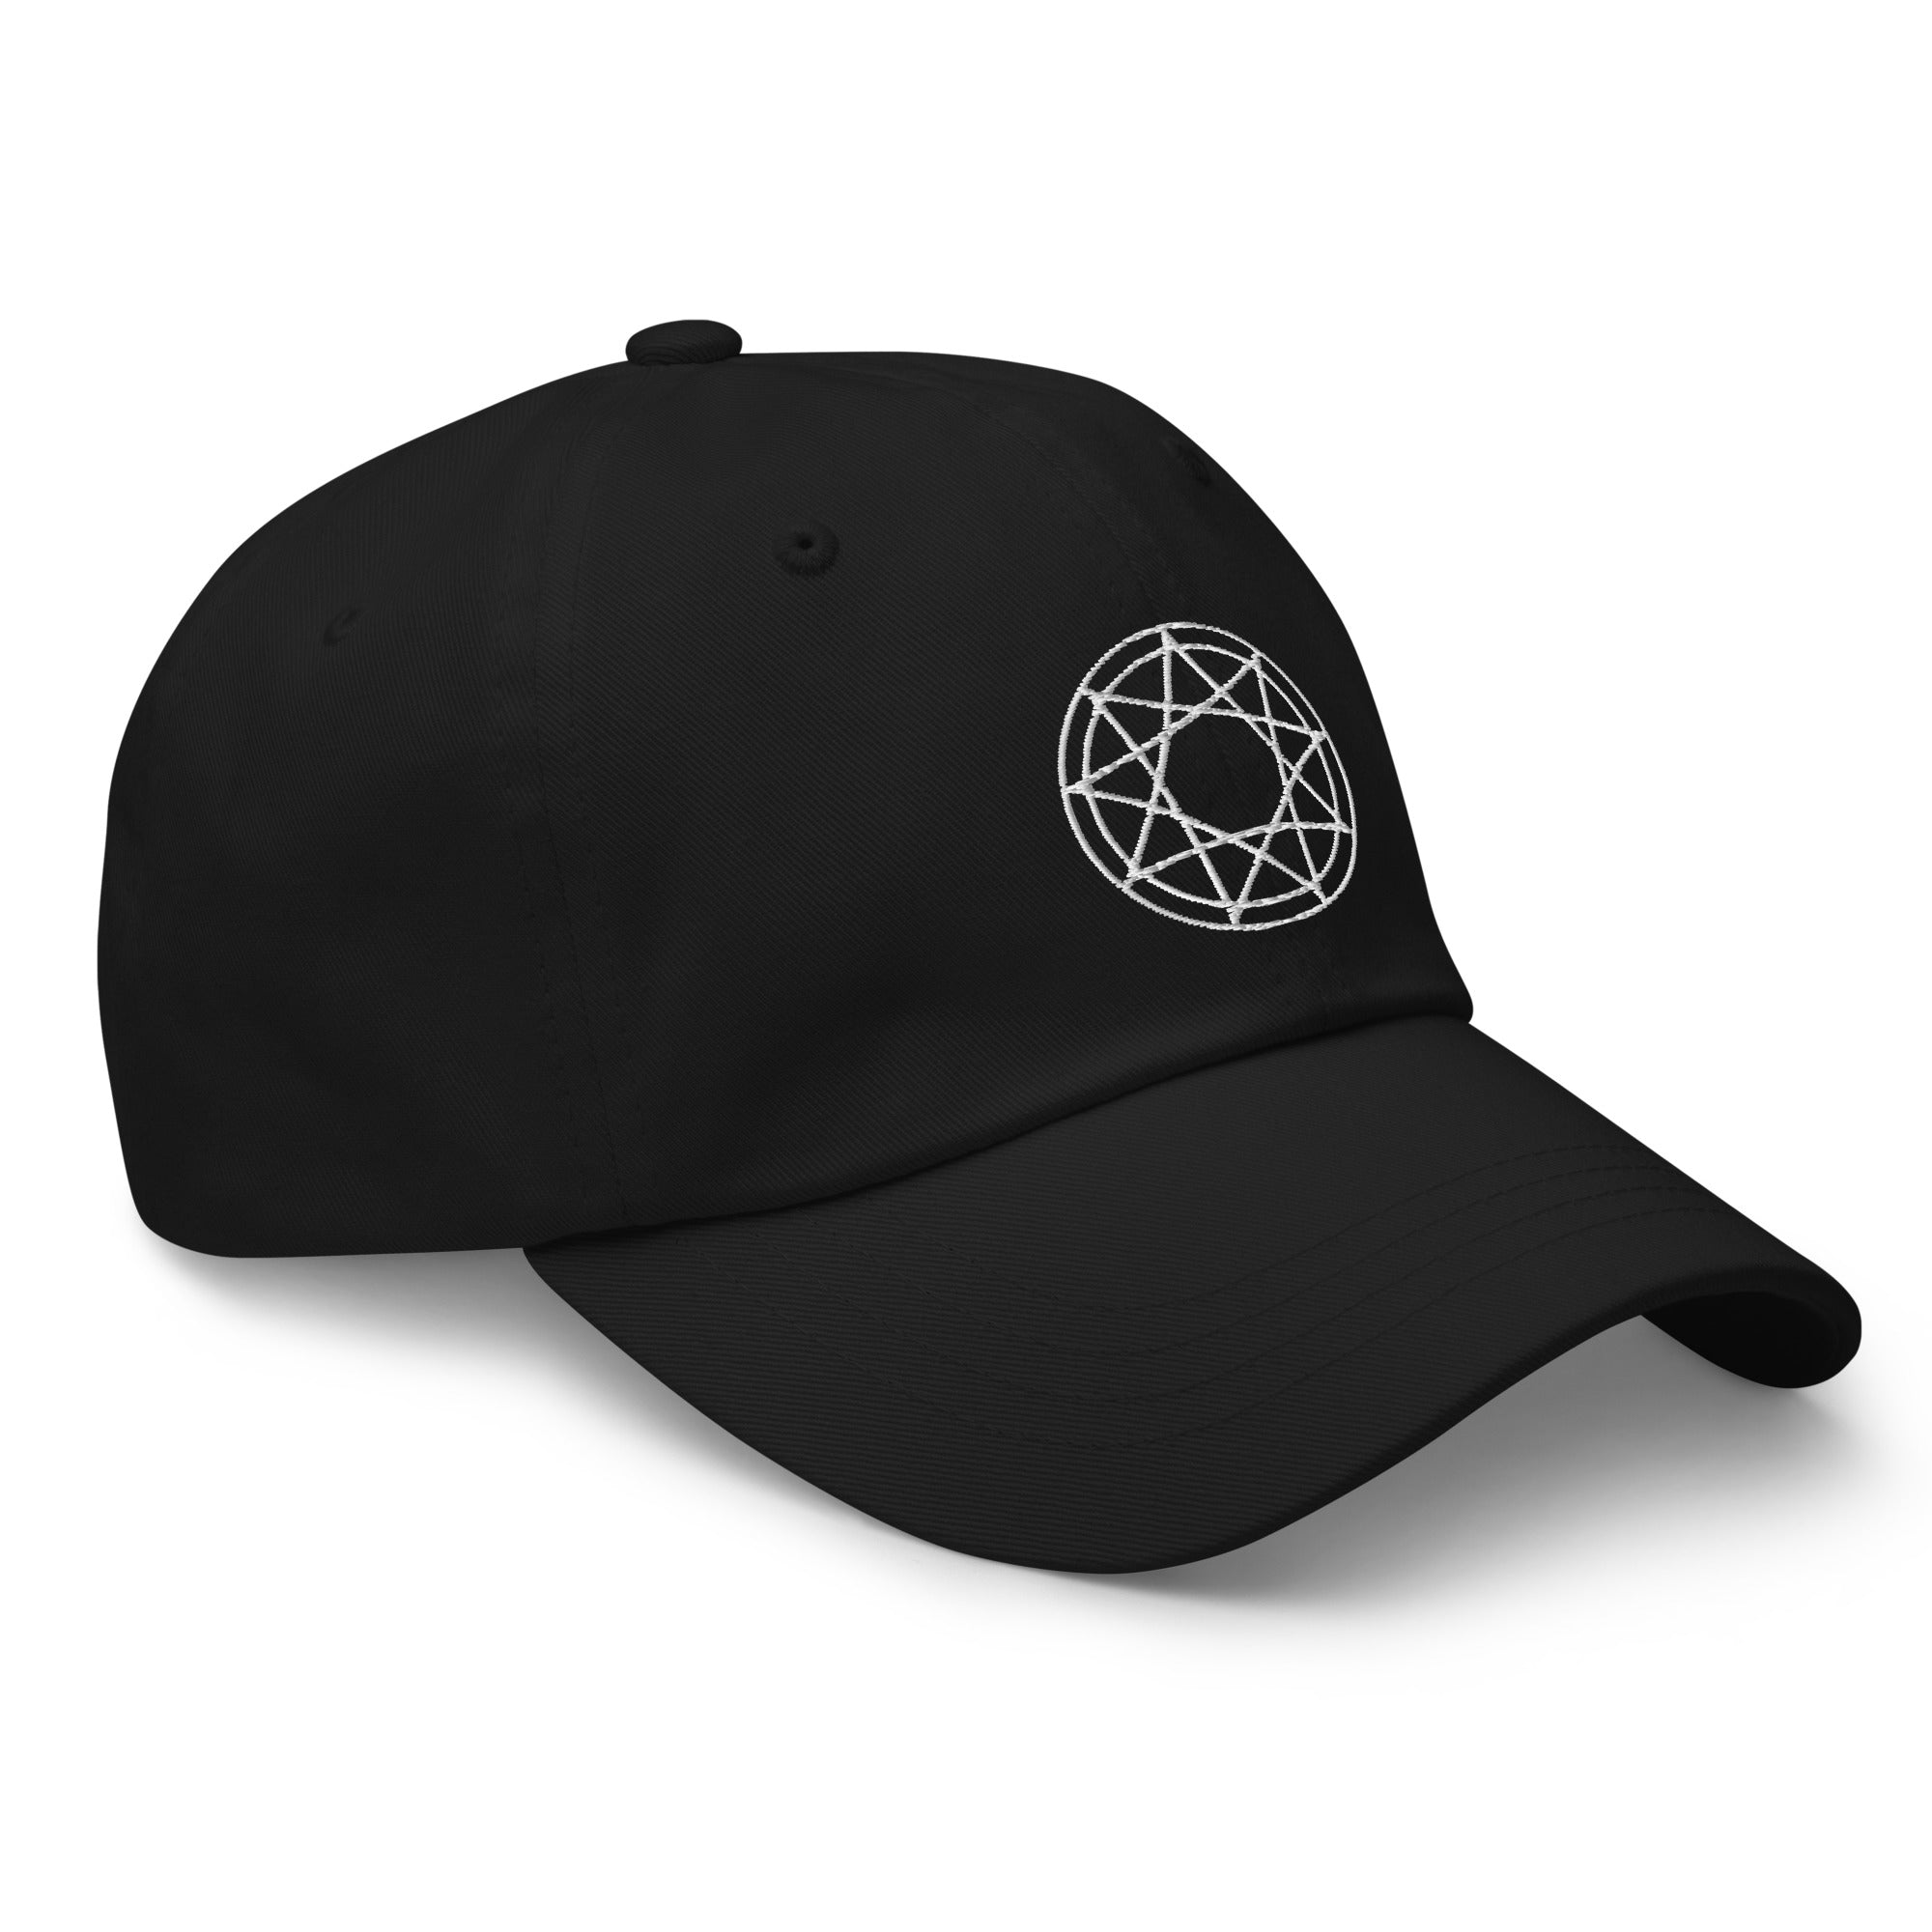 9 Point Star Pentagram Occult Symbol Embroidered Baseball Cap Slipknot Dad hat White Thread - Edge of Life Designs